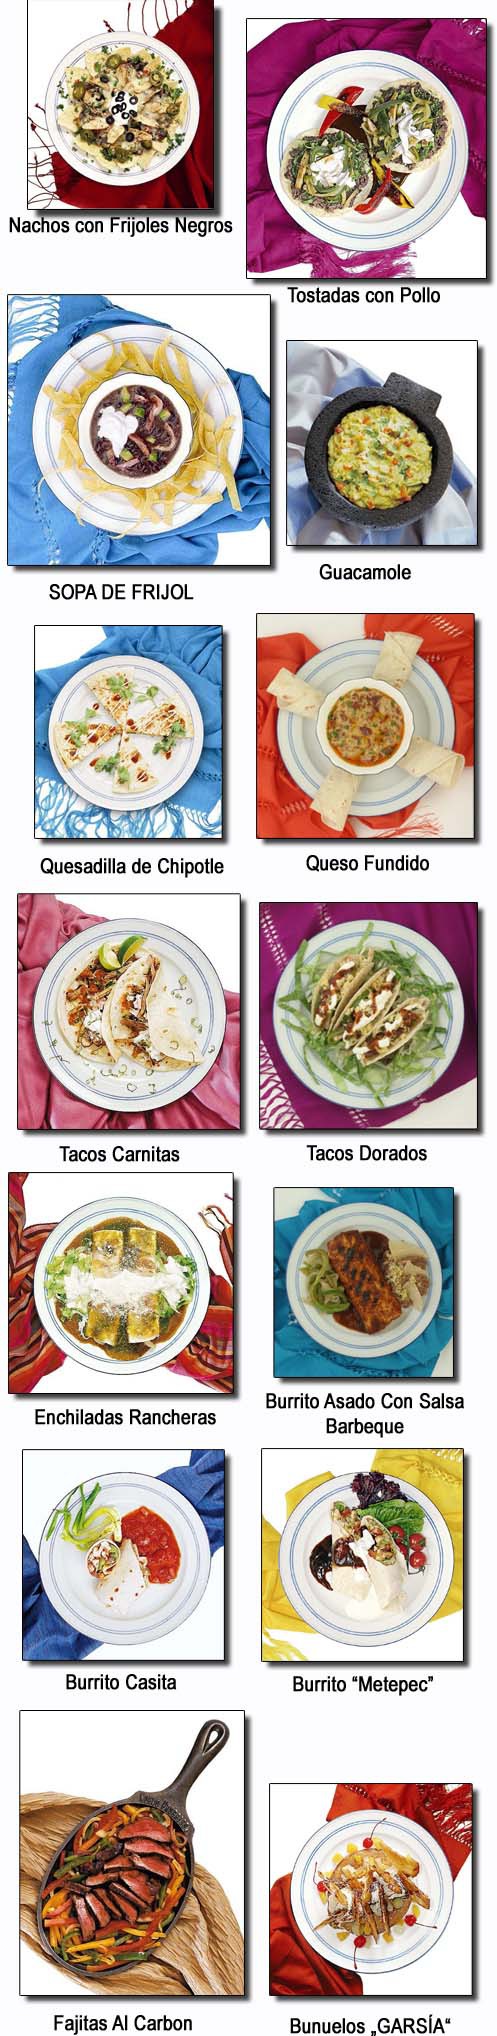 mexicka-kuchyne.jpg